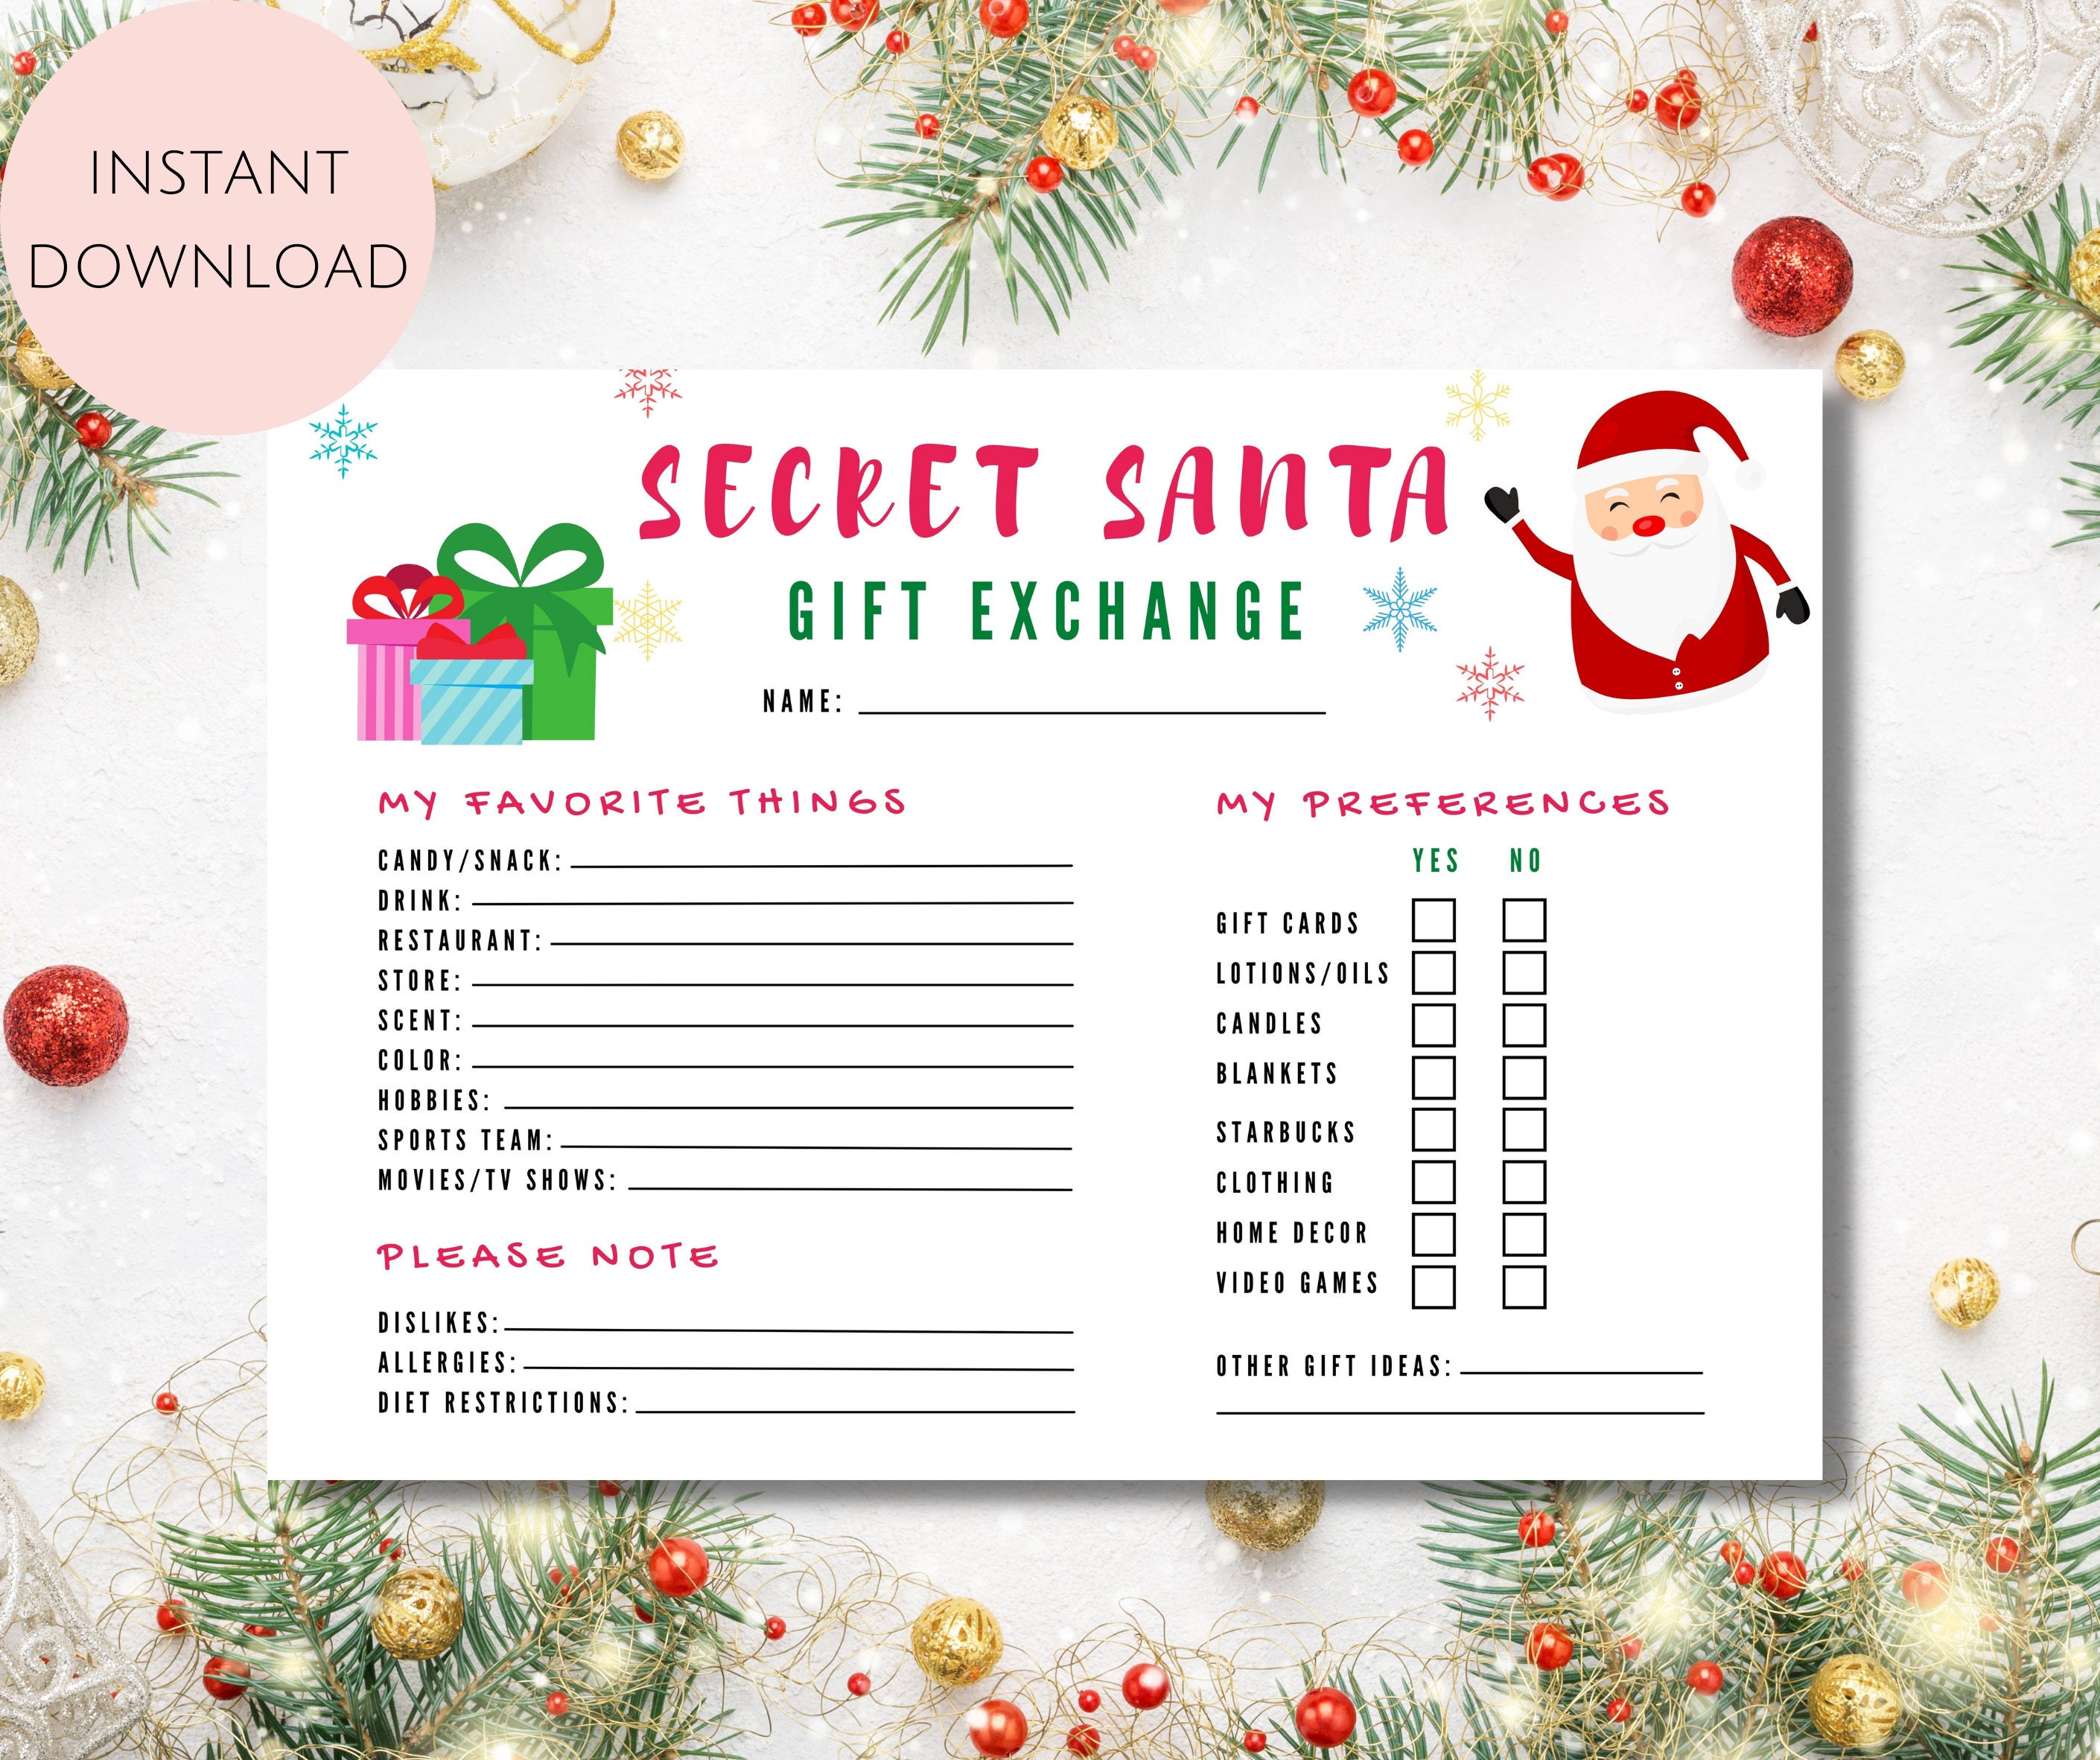 Secret Santa List Free Printable Ubicaciondepersonas cdmx gob mx